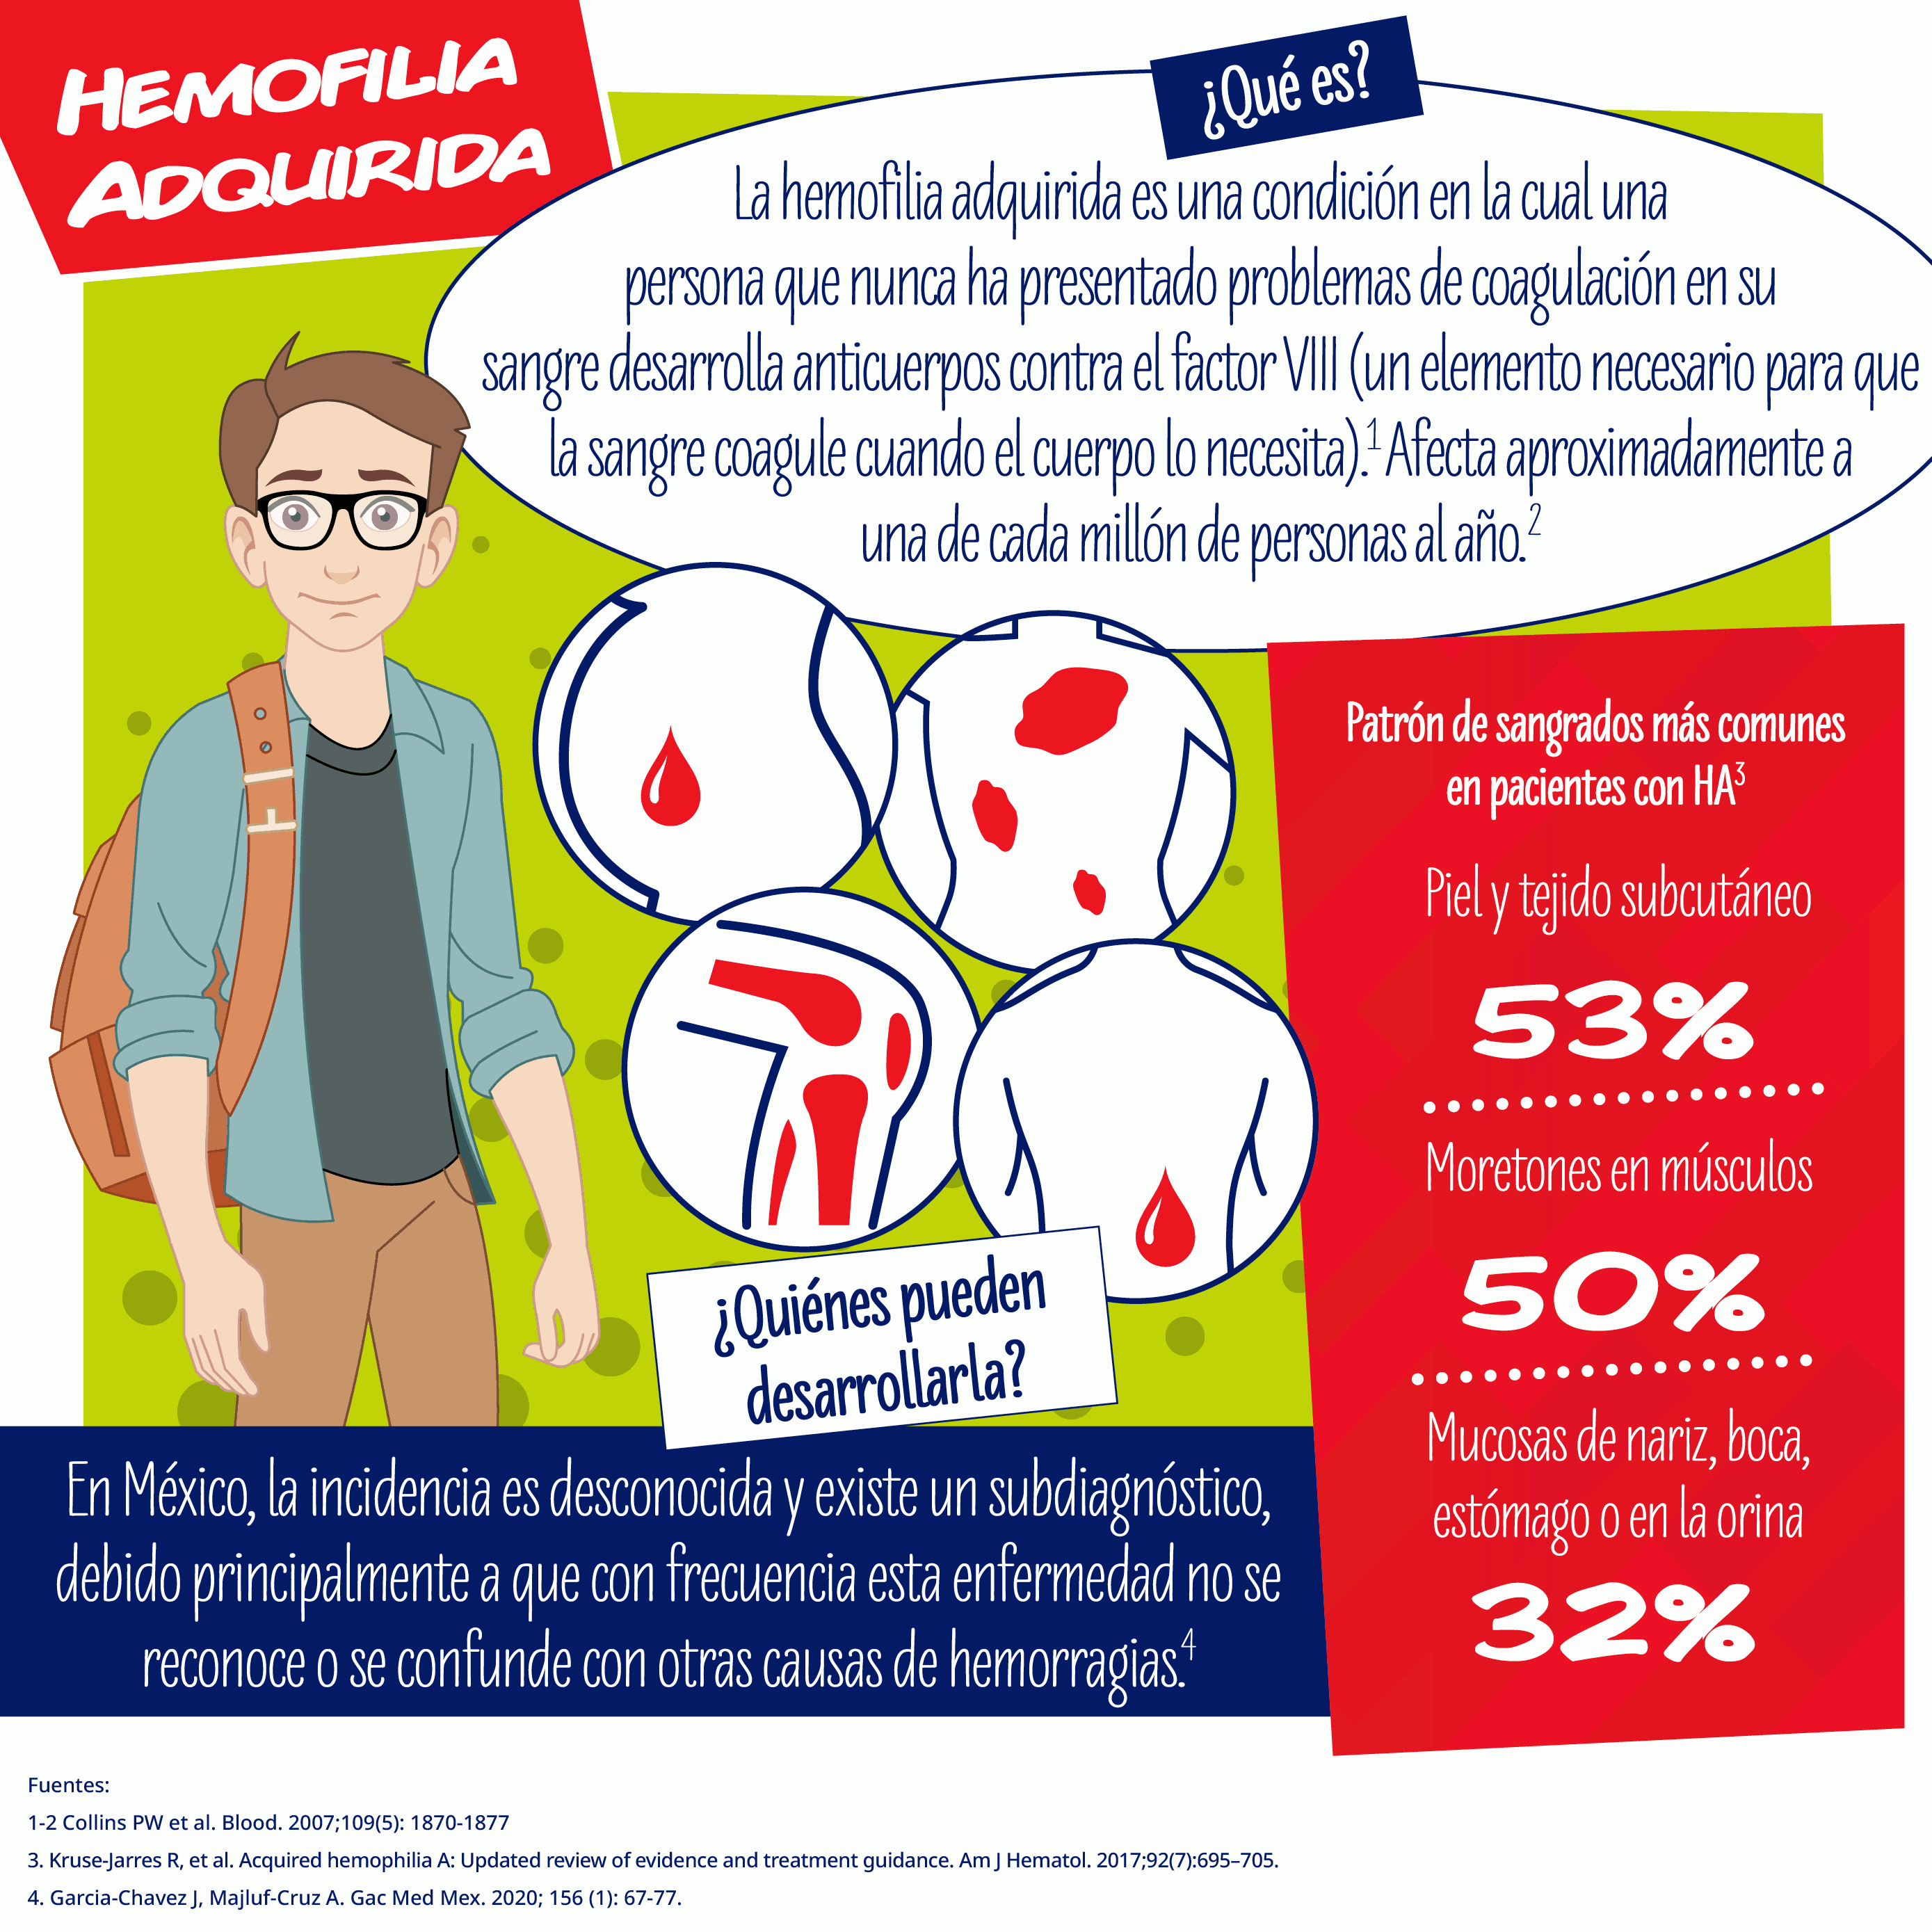 Hemofilia adquirida, una enfermedad rara